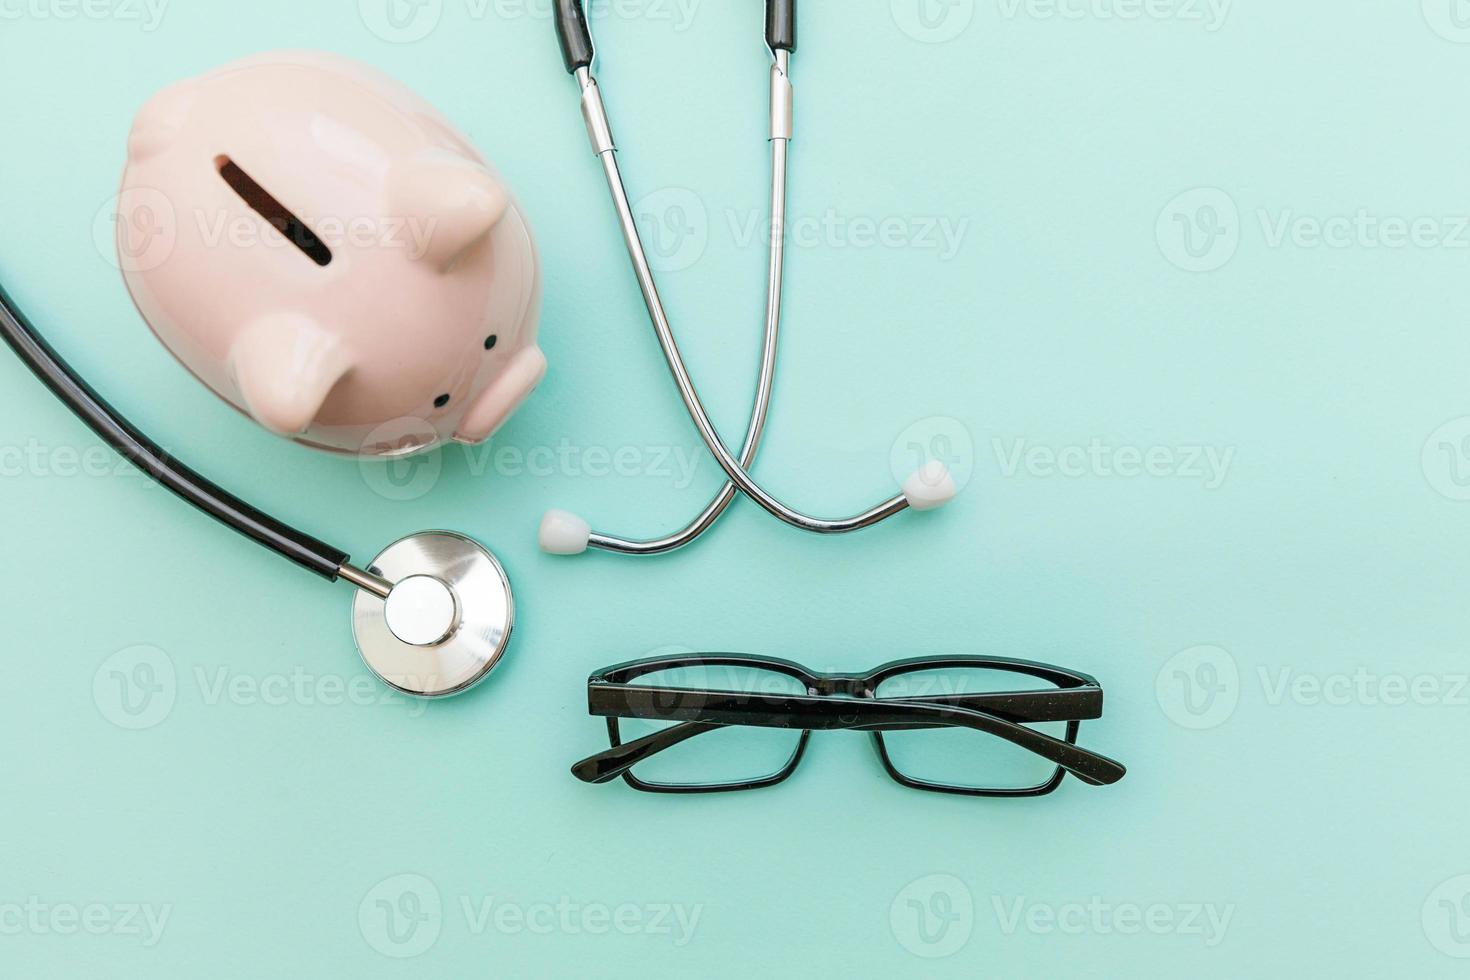 estetoscópio de equipamento médico de medicina ou óculos de mealheiro de estetoscópio isolados em fundo azul pastel na moda foto